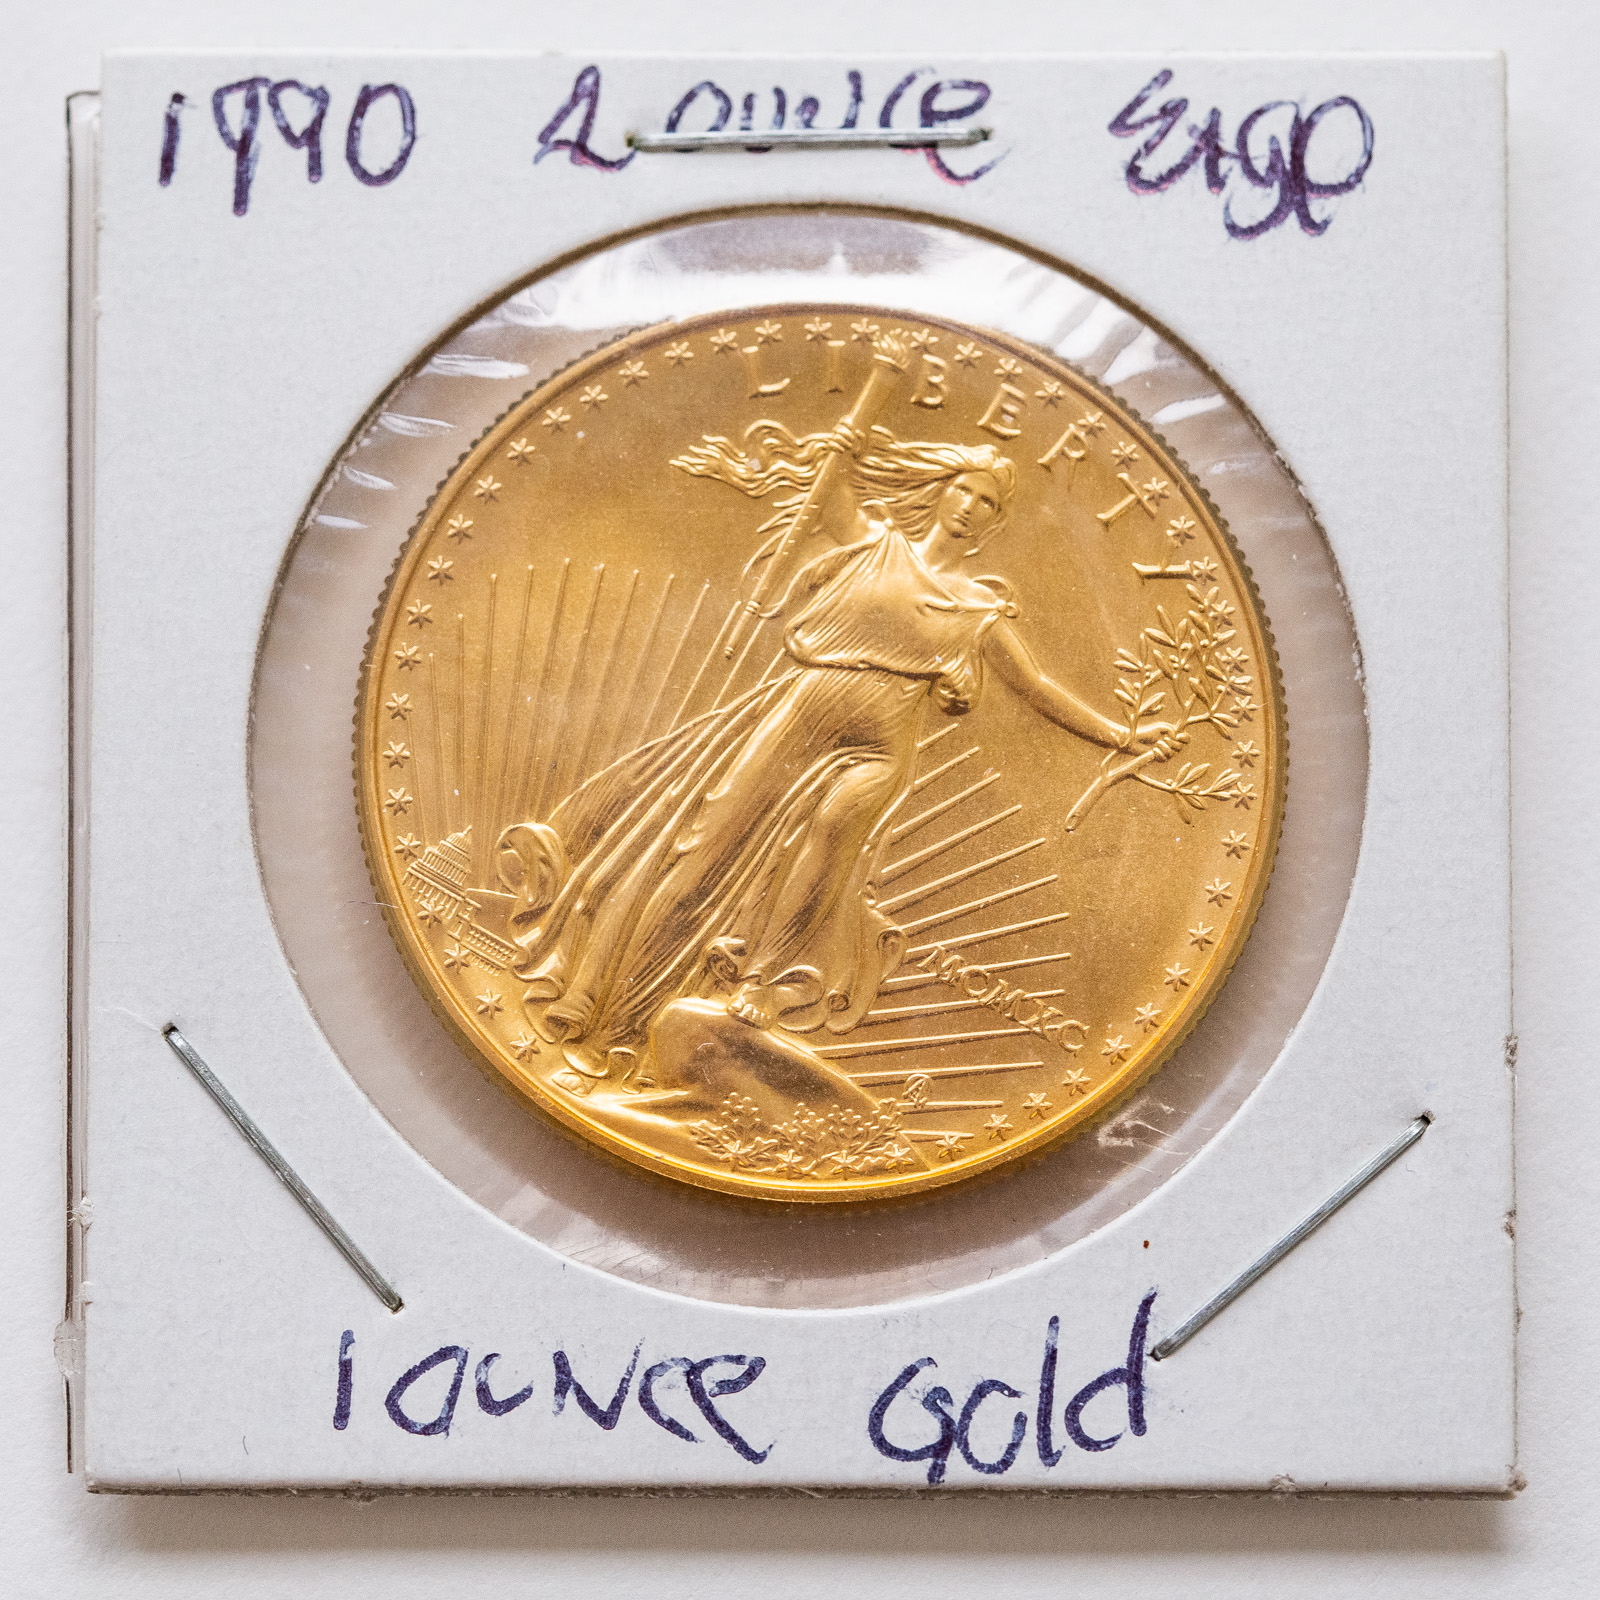 1990 1 OUNCE GOLD AMERICAN EAGLE